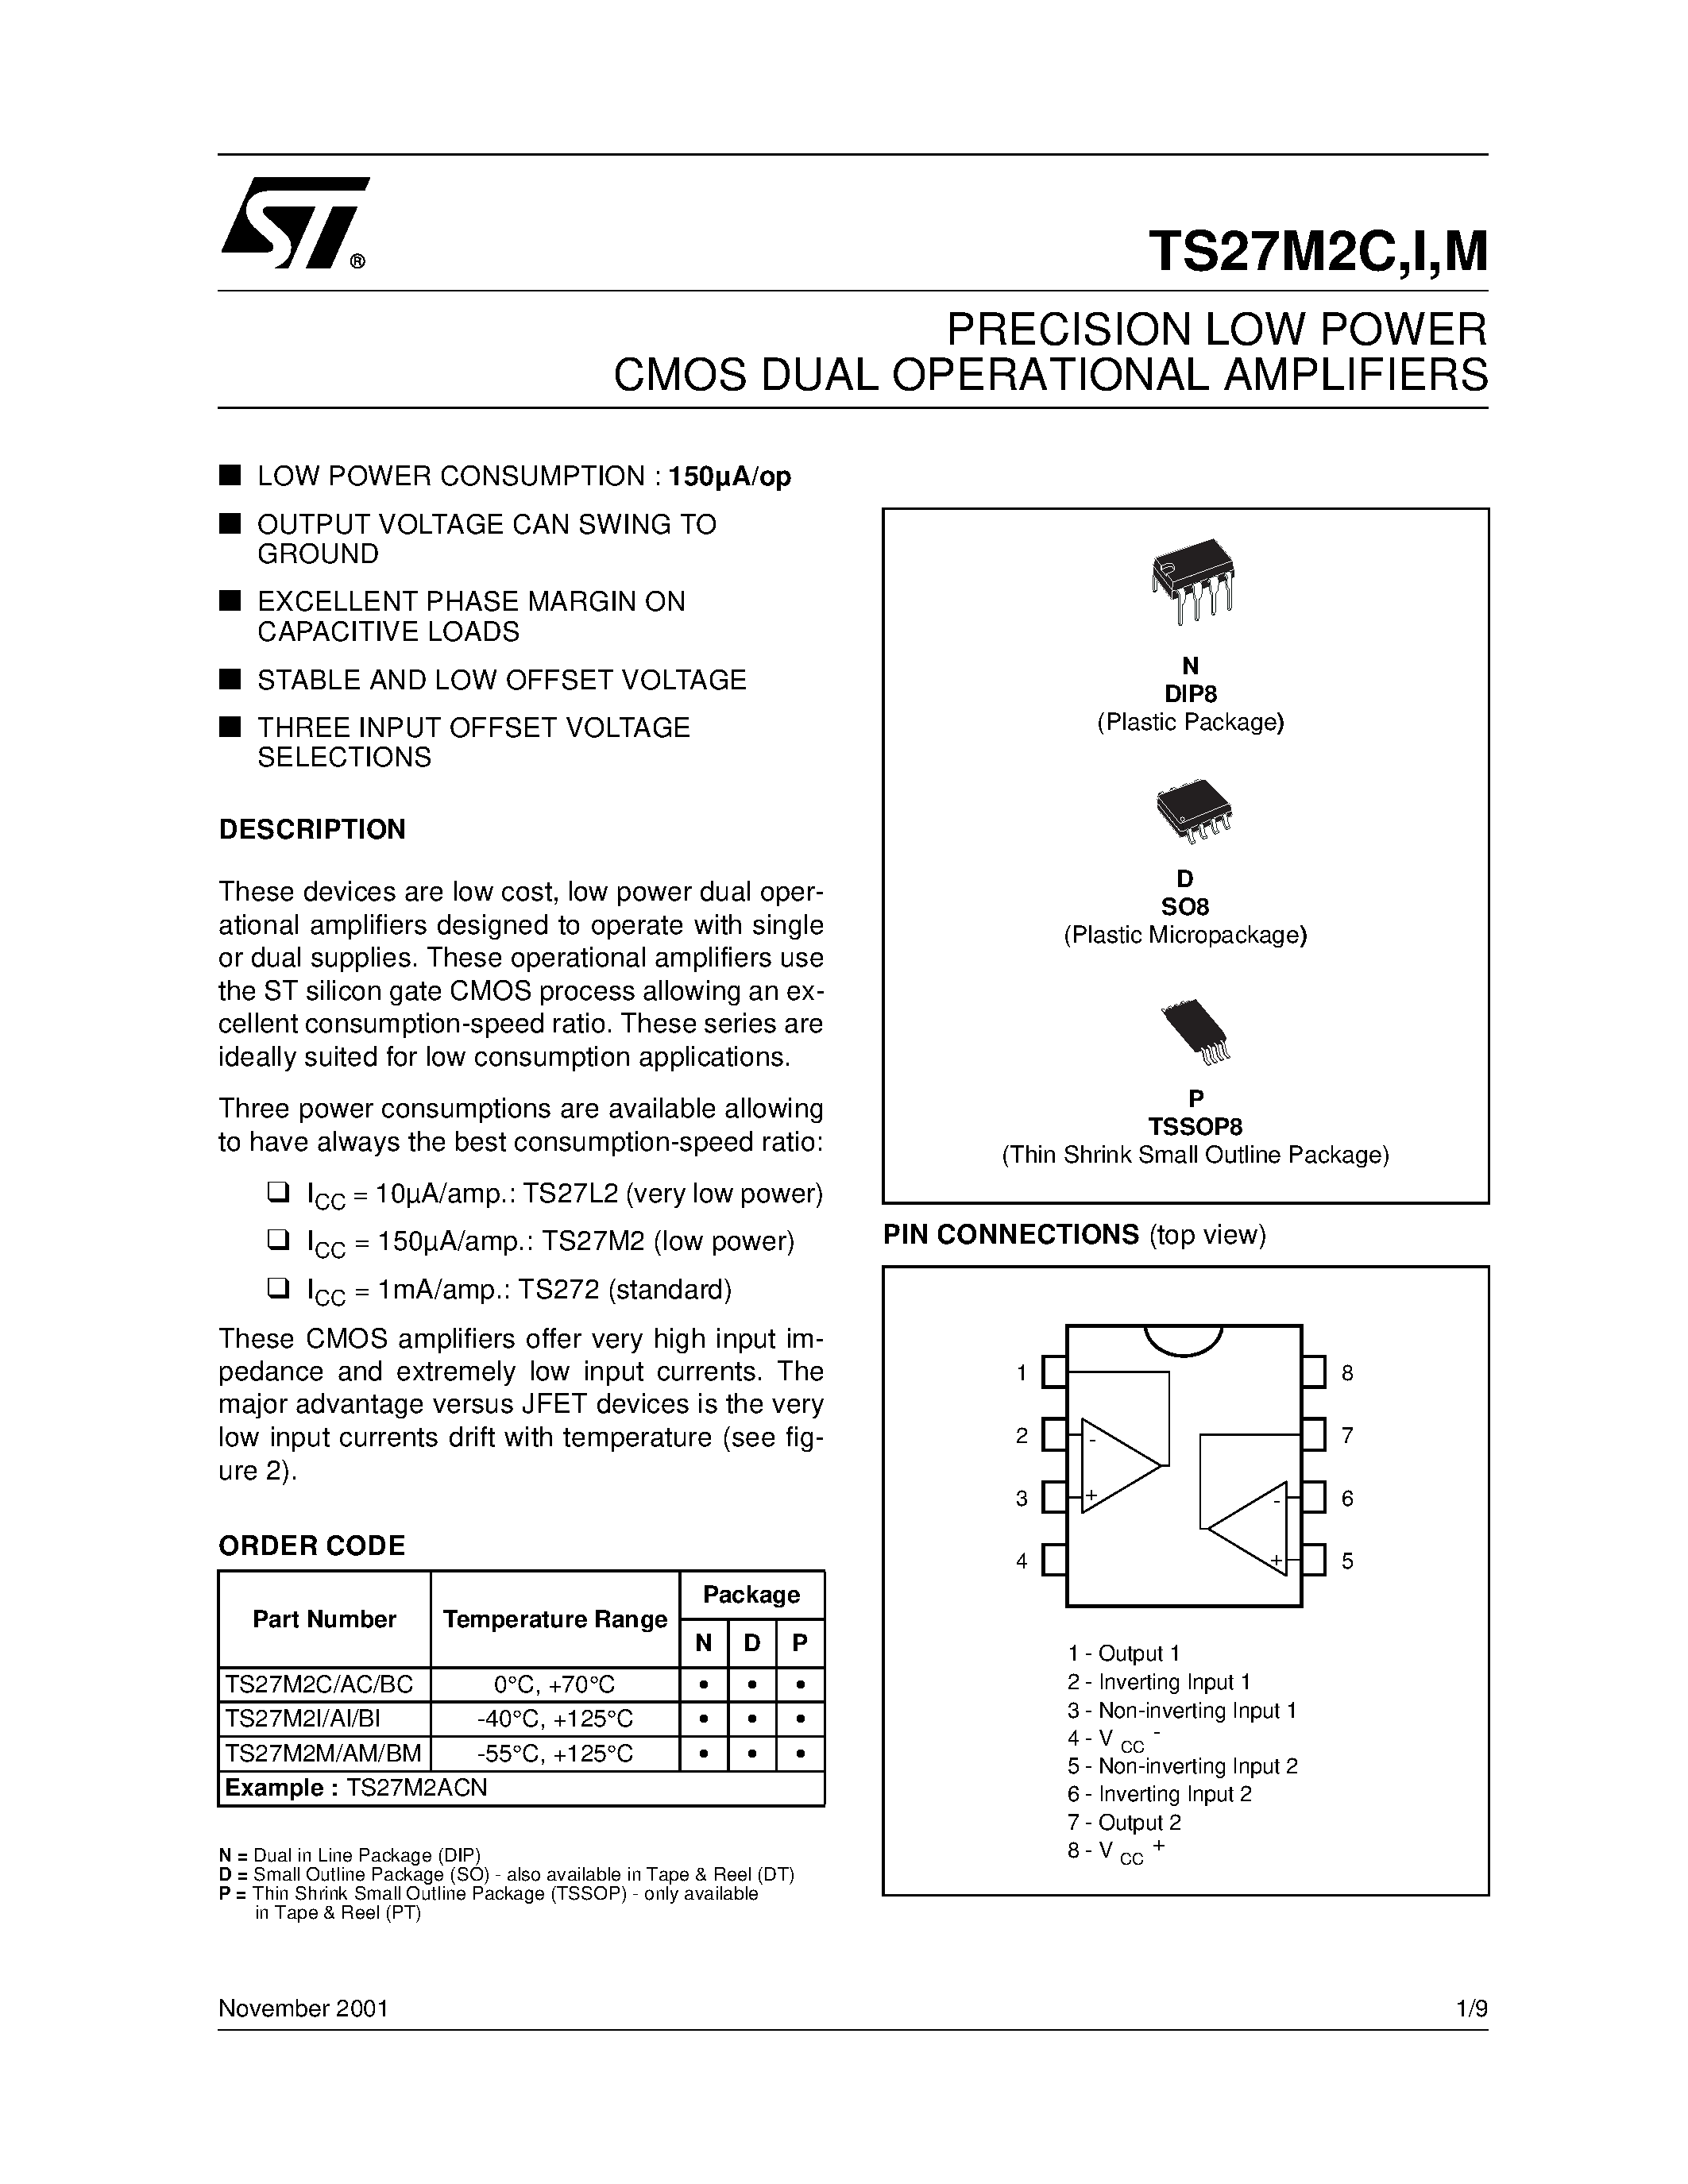 Datasheet TS27M2BI - PRECISION LOW POWER CMOS DUAL OPERATIONAL AMPLIFIERS page 1